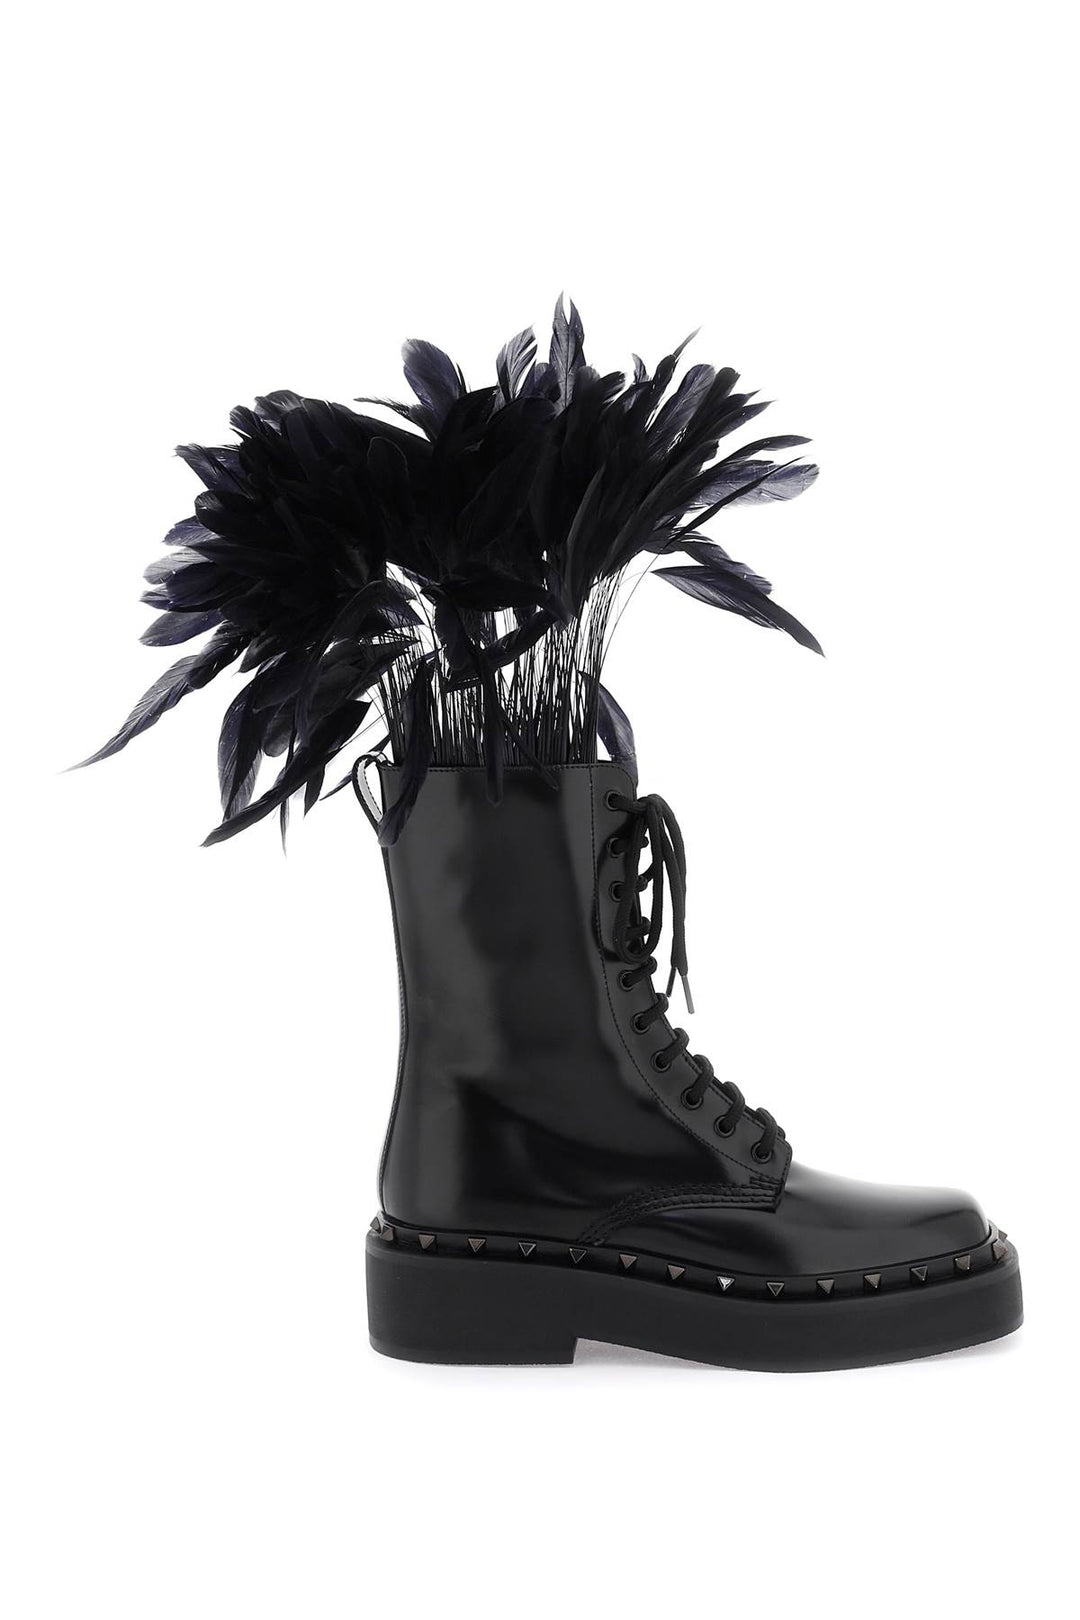 Valentino Garavani Leather M Way Rockstud Combat Boots With Feathers   Nero